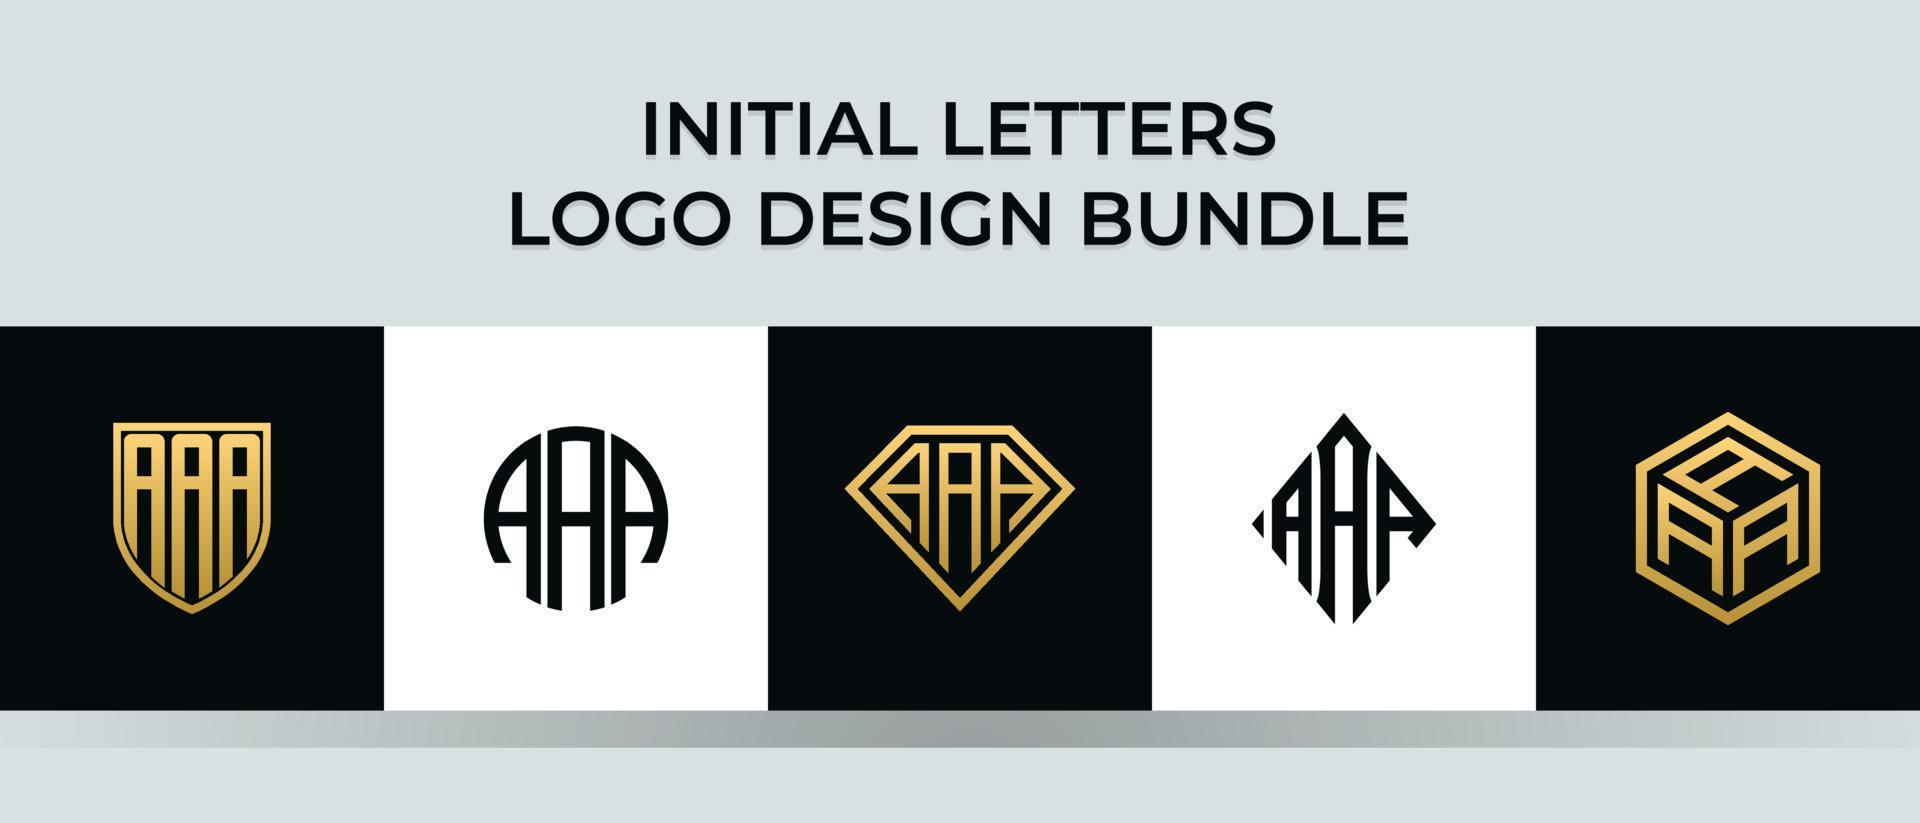 Initial letters AAA logo designs Bundle vector